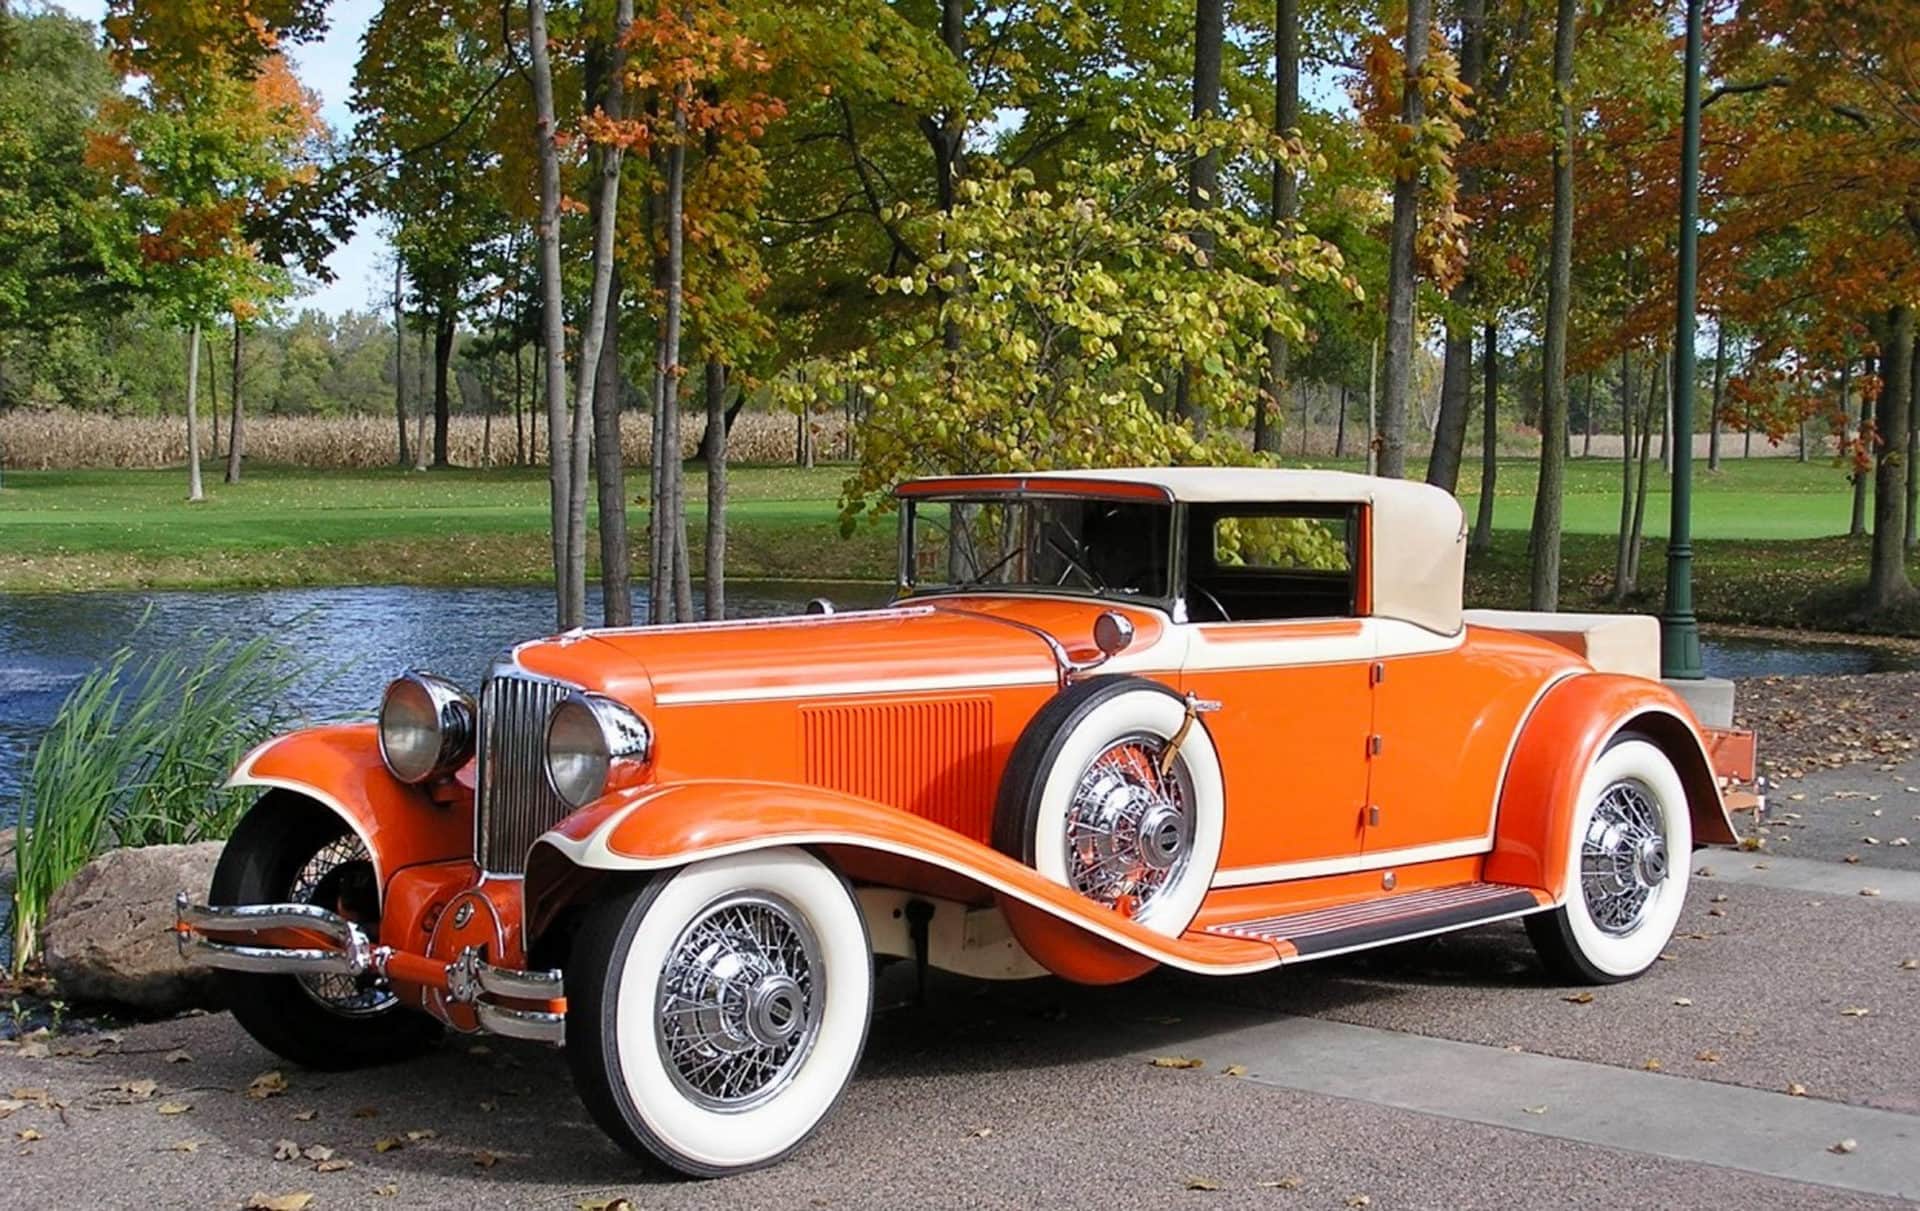 Beyond the racetrack: The Auburn Cord Duesenberg Automobile Museum  preserves Indiana's rich automotive history - Roadtrippers